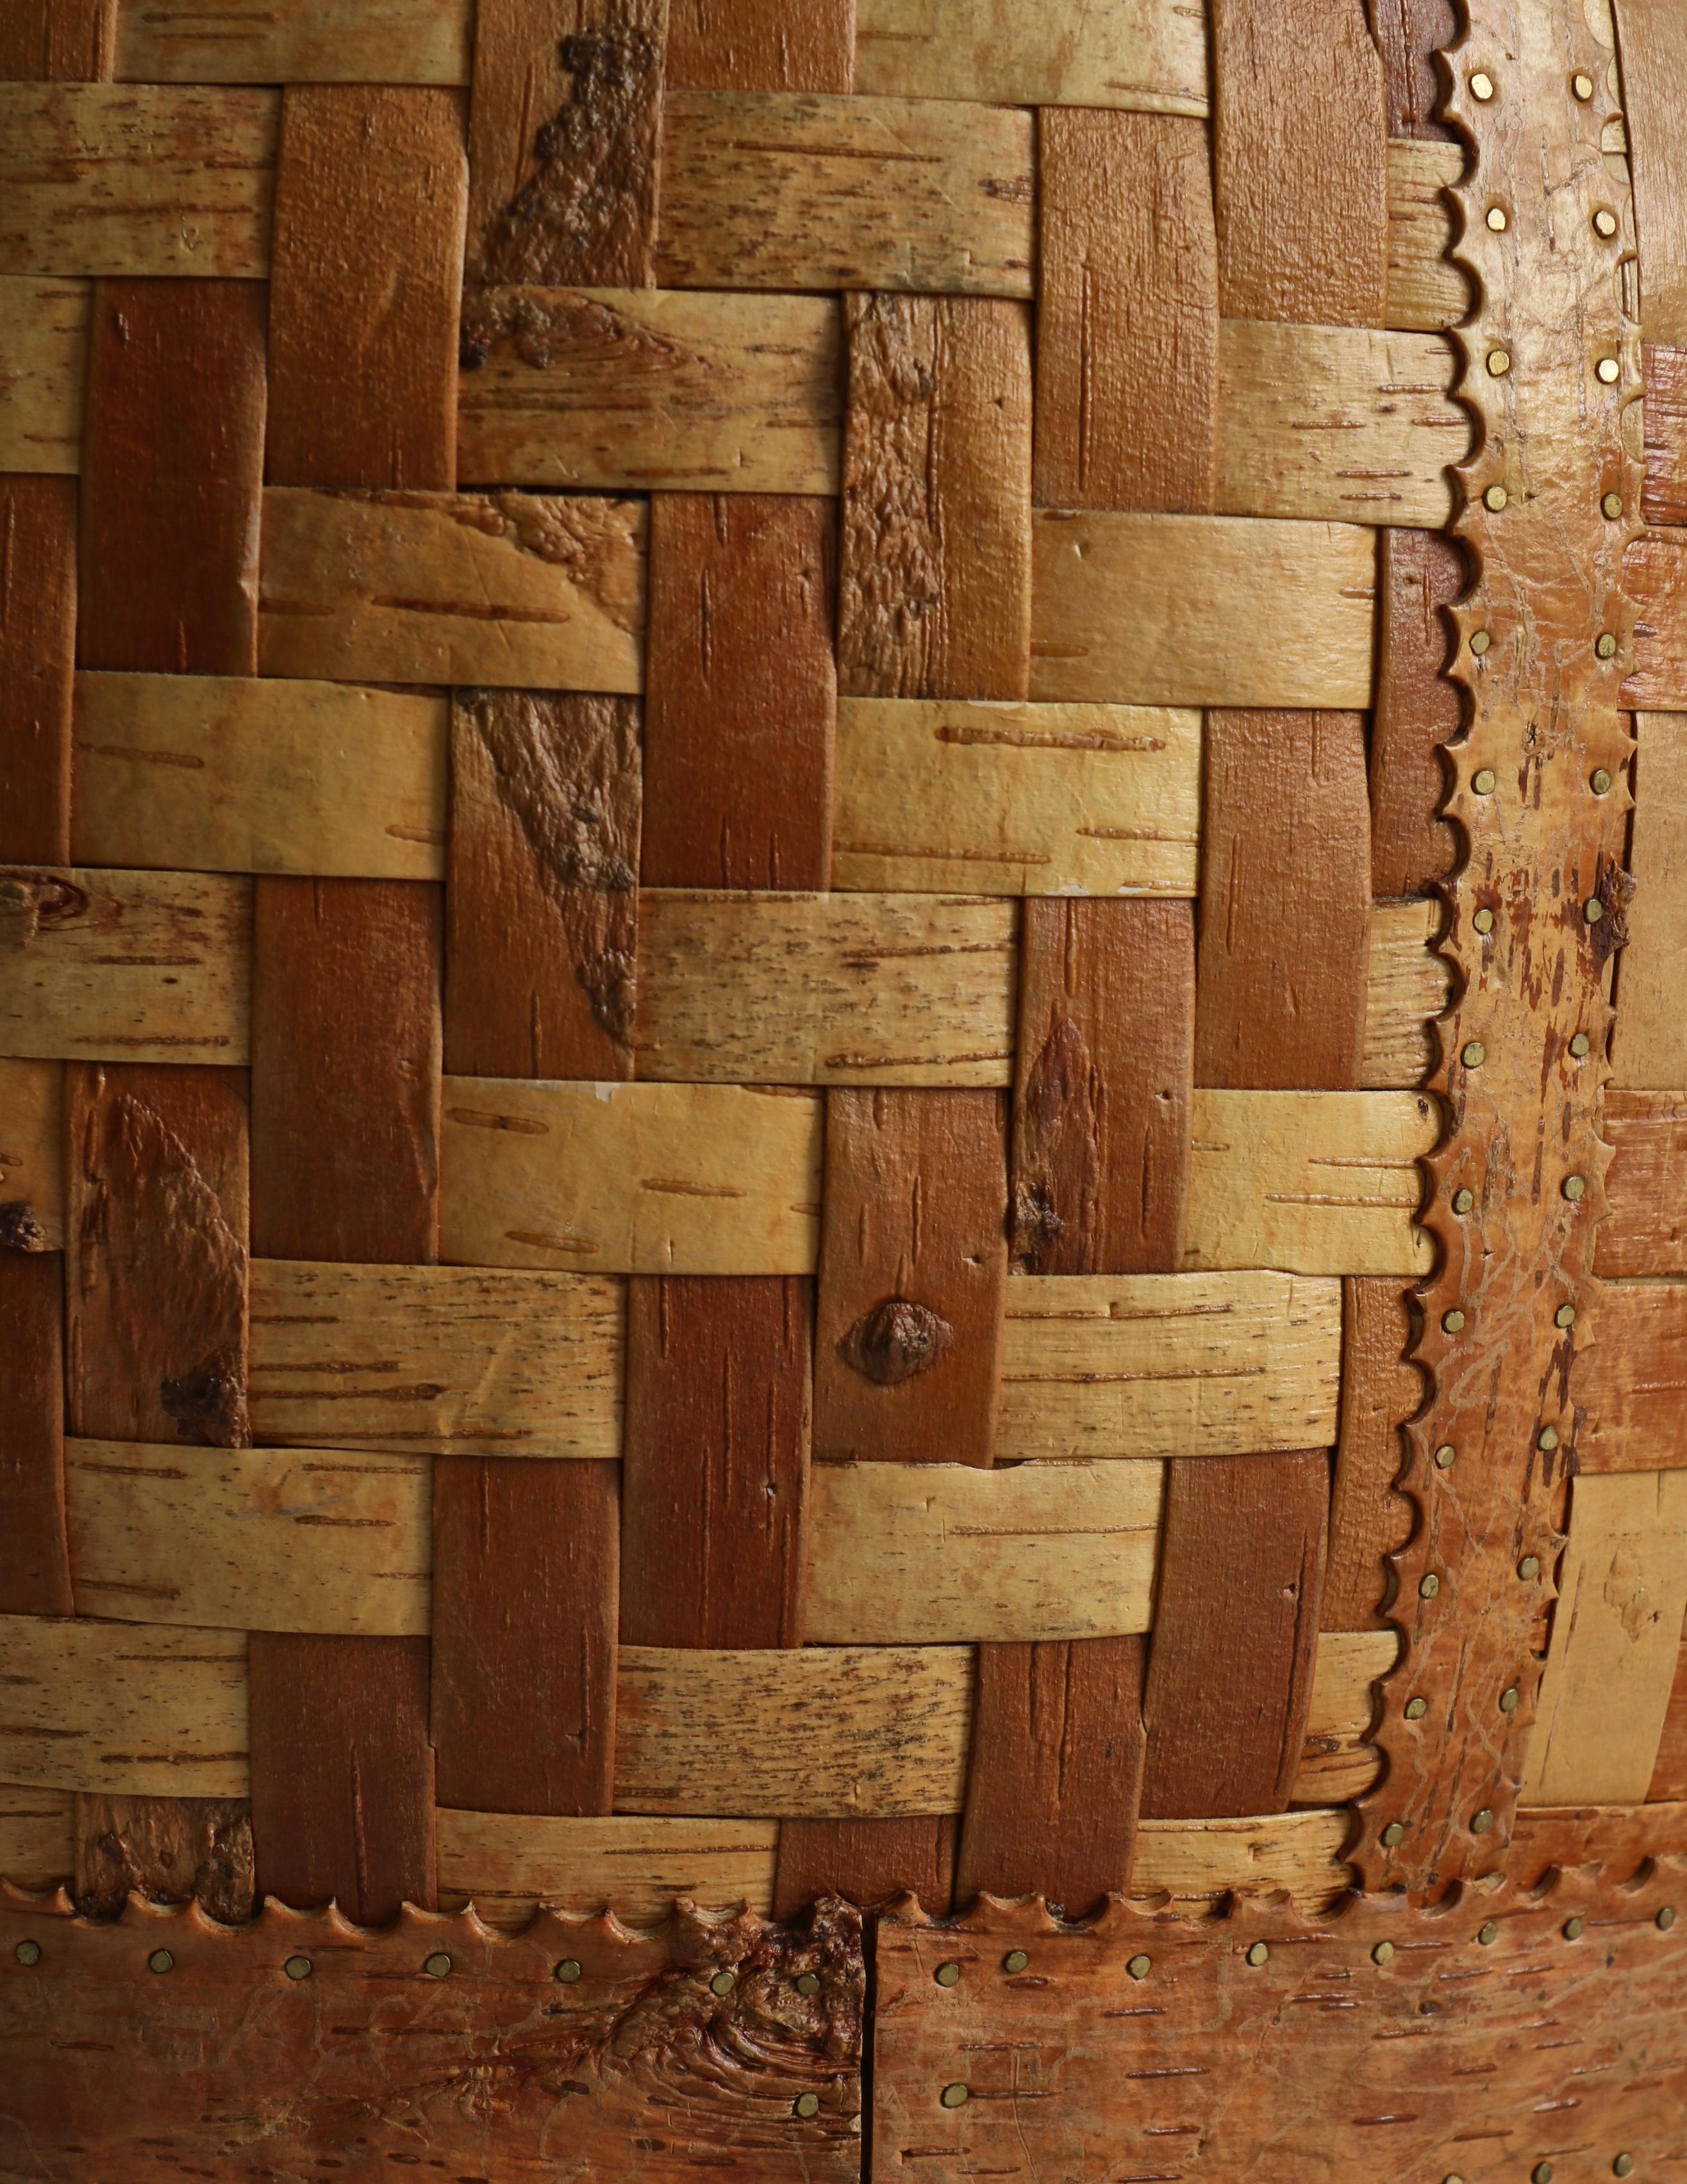 Decorative Basket Handmade in Braided Birch Bark, 